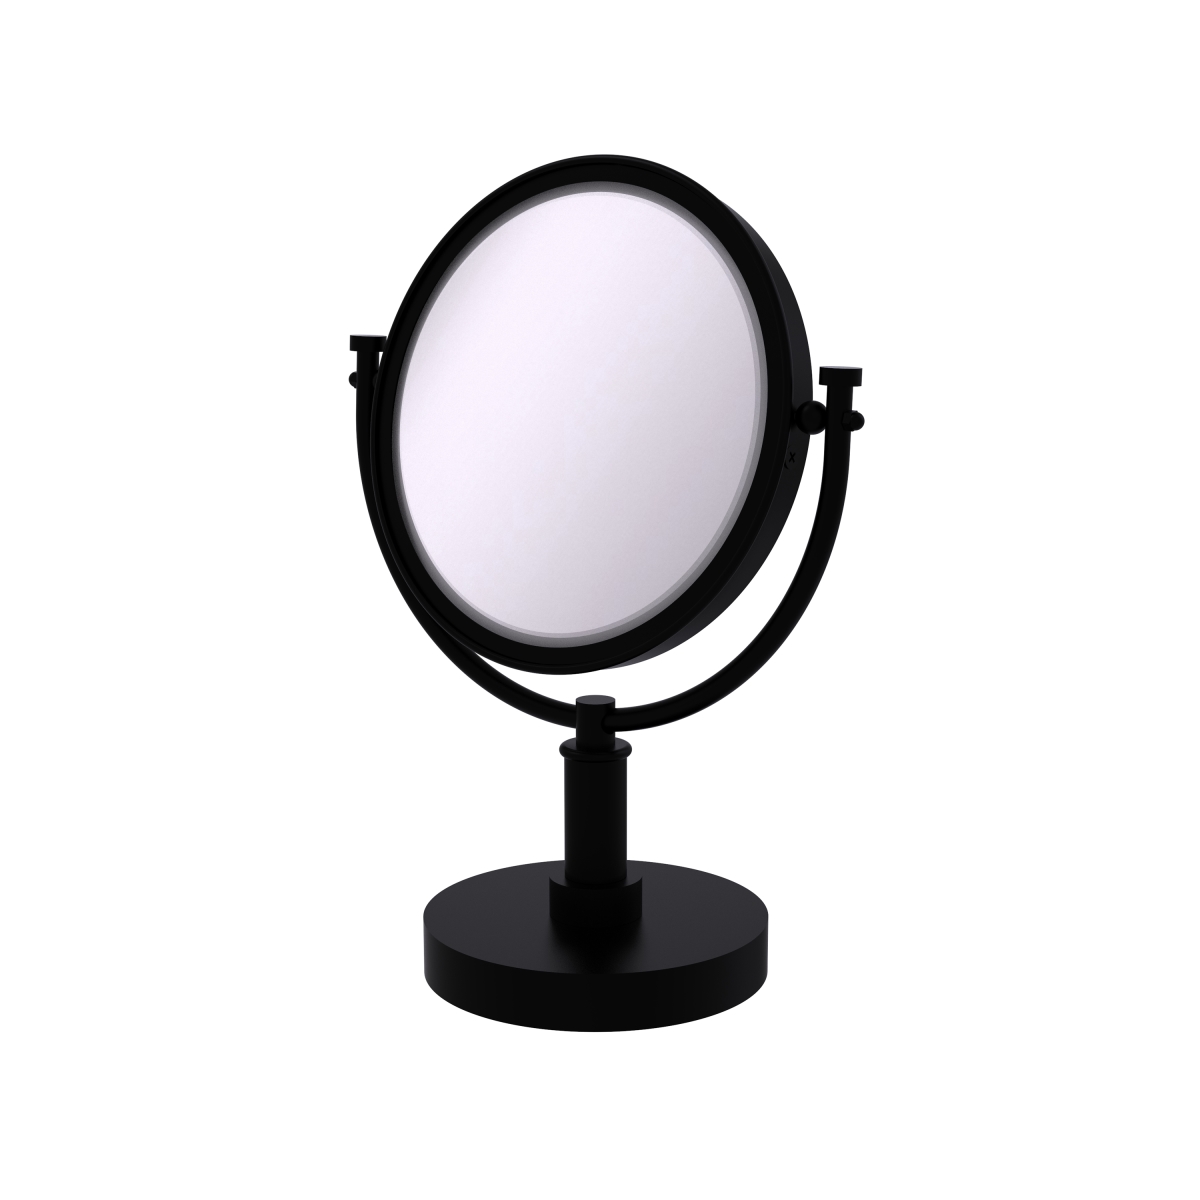 Dm-4-3x-bkm 8 In. Vanity Top Make-up Mirror 3x Magnification, Matte Black